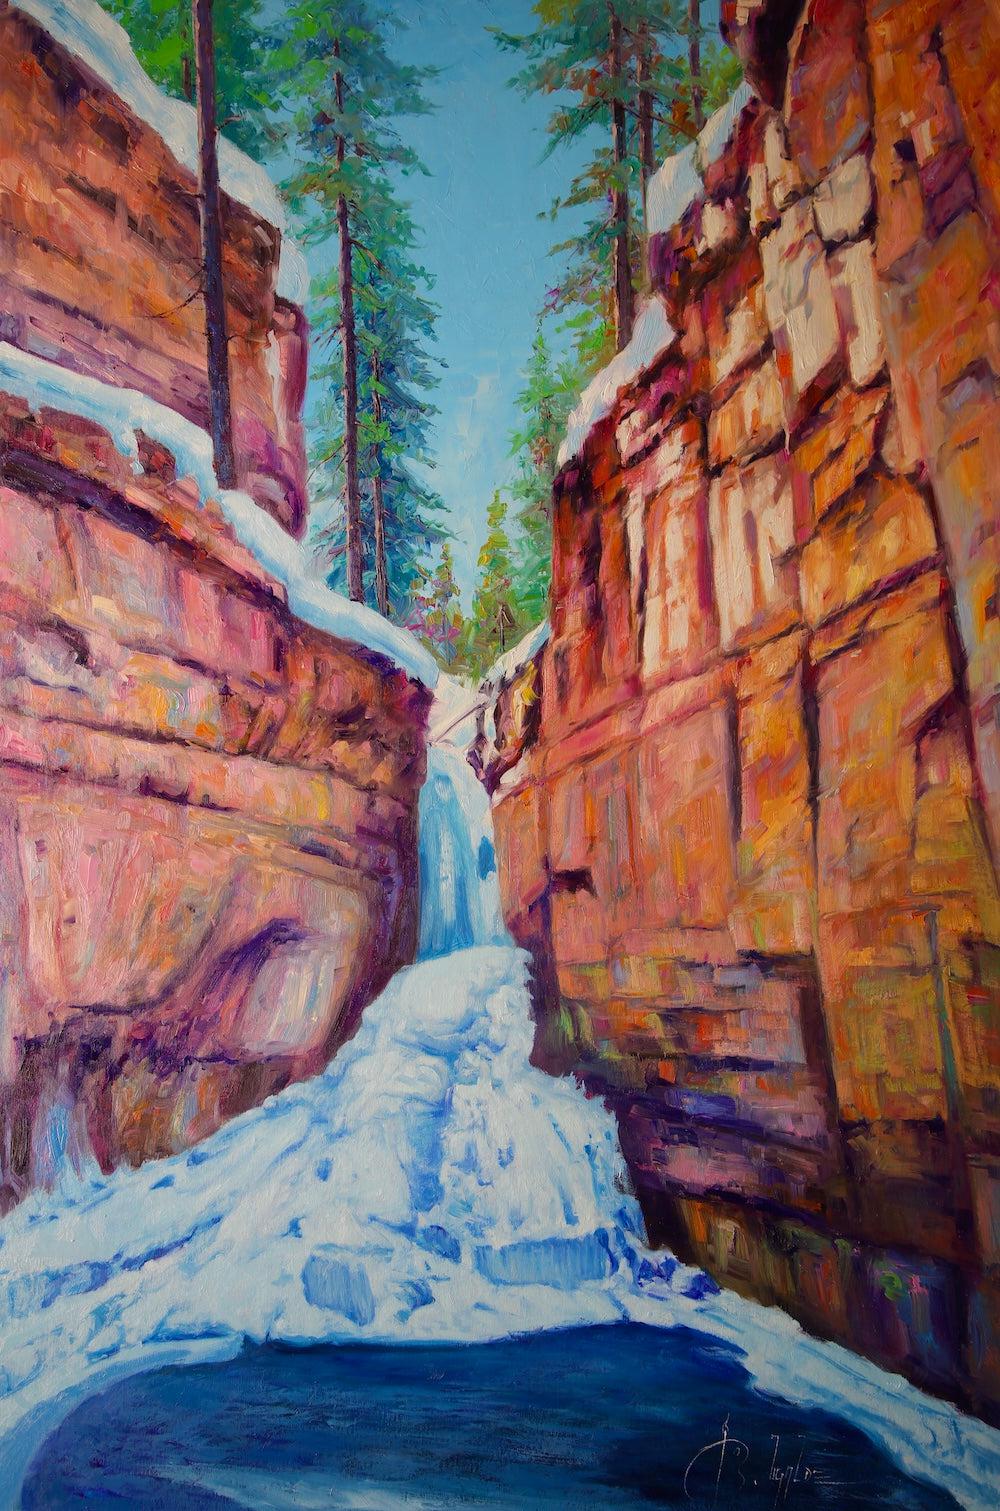 Frozen Cascade Waterfall-Painting-Roberto Ugalde-Sorrel Sky Gallery